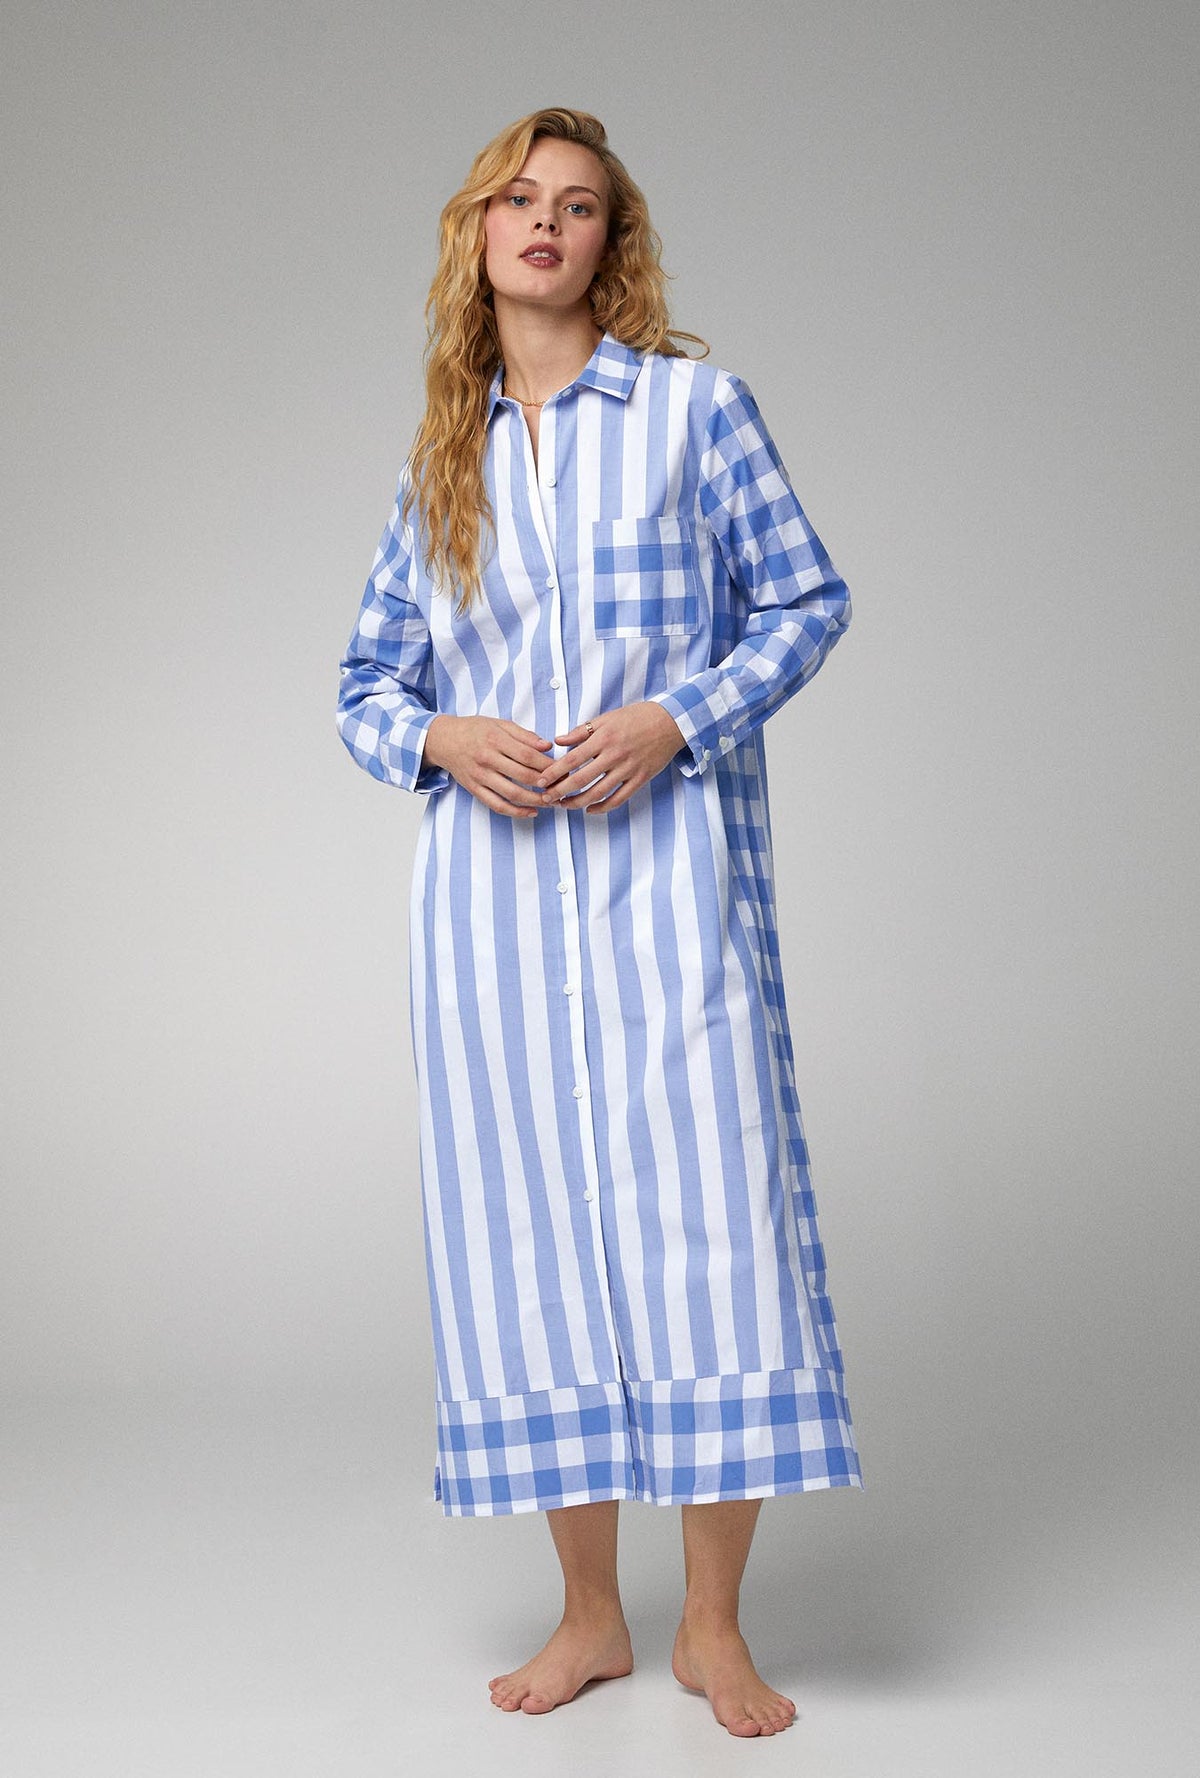 A lady wearing maxi collared cotton poplin sleepshirt with bengal stripe print